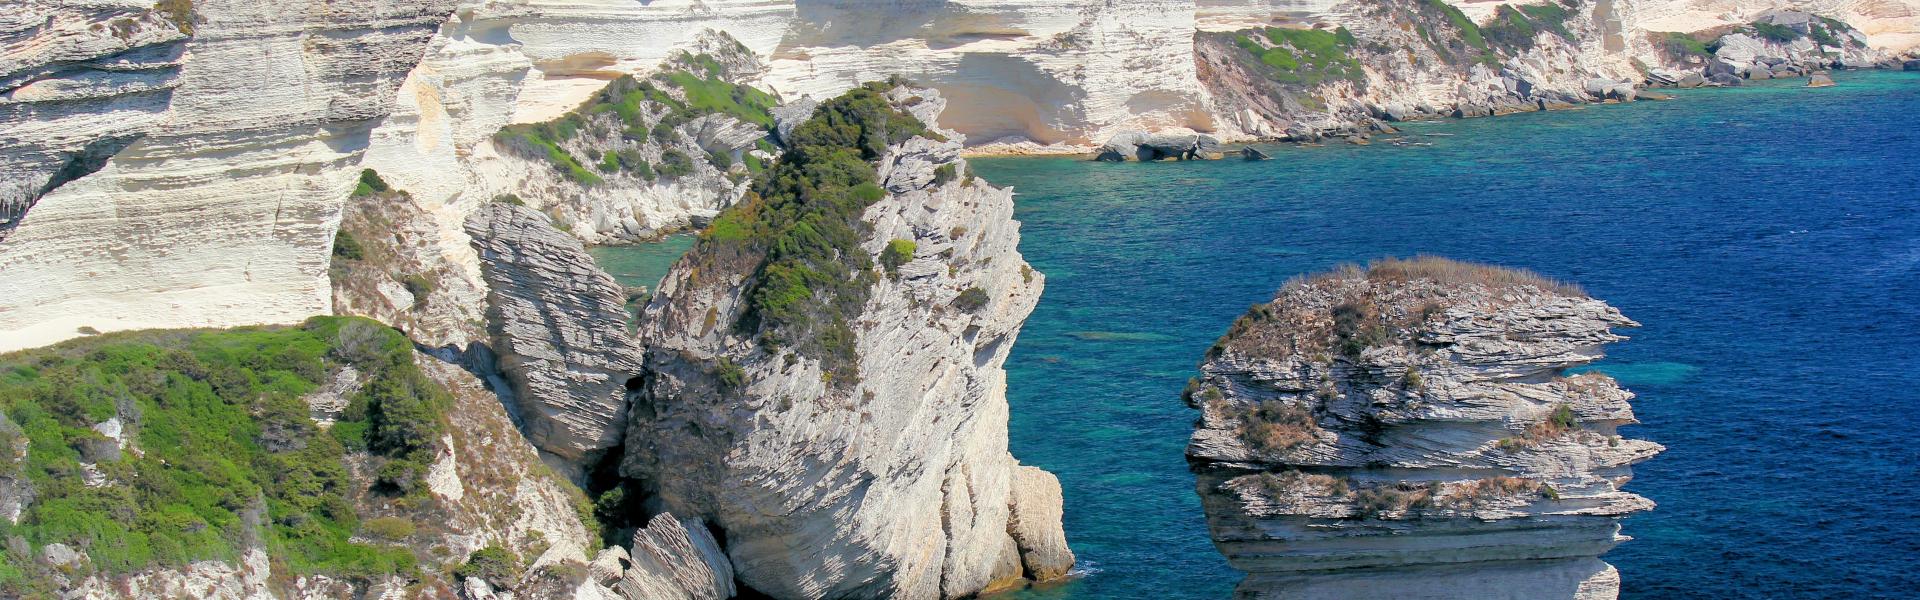 Location de vacances à Figari - Corse-du-Sud - amivac